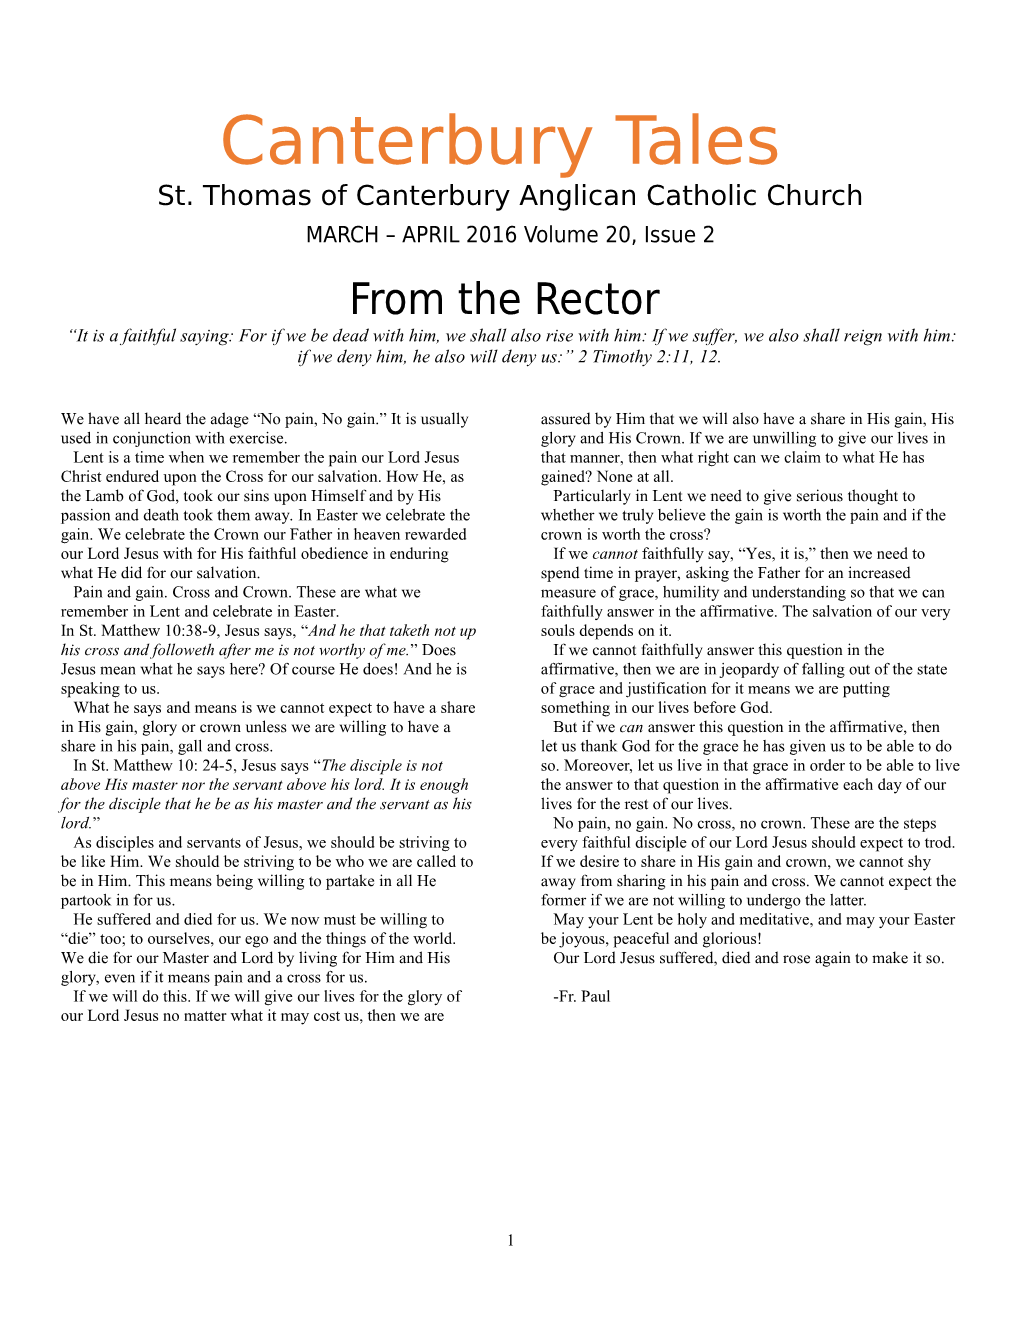 St. Thomas of Canterbury Anglican Catholic Church